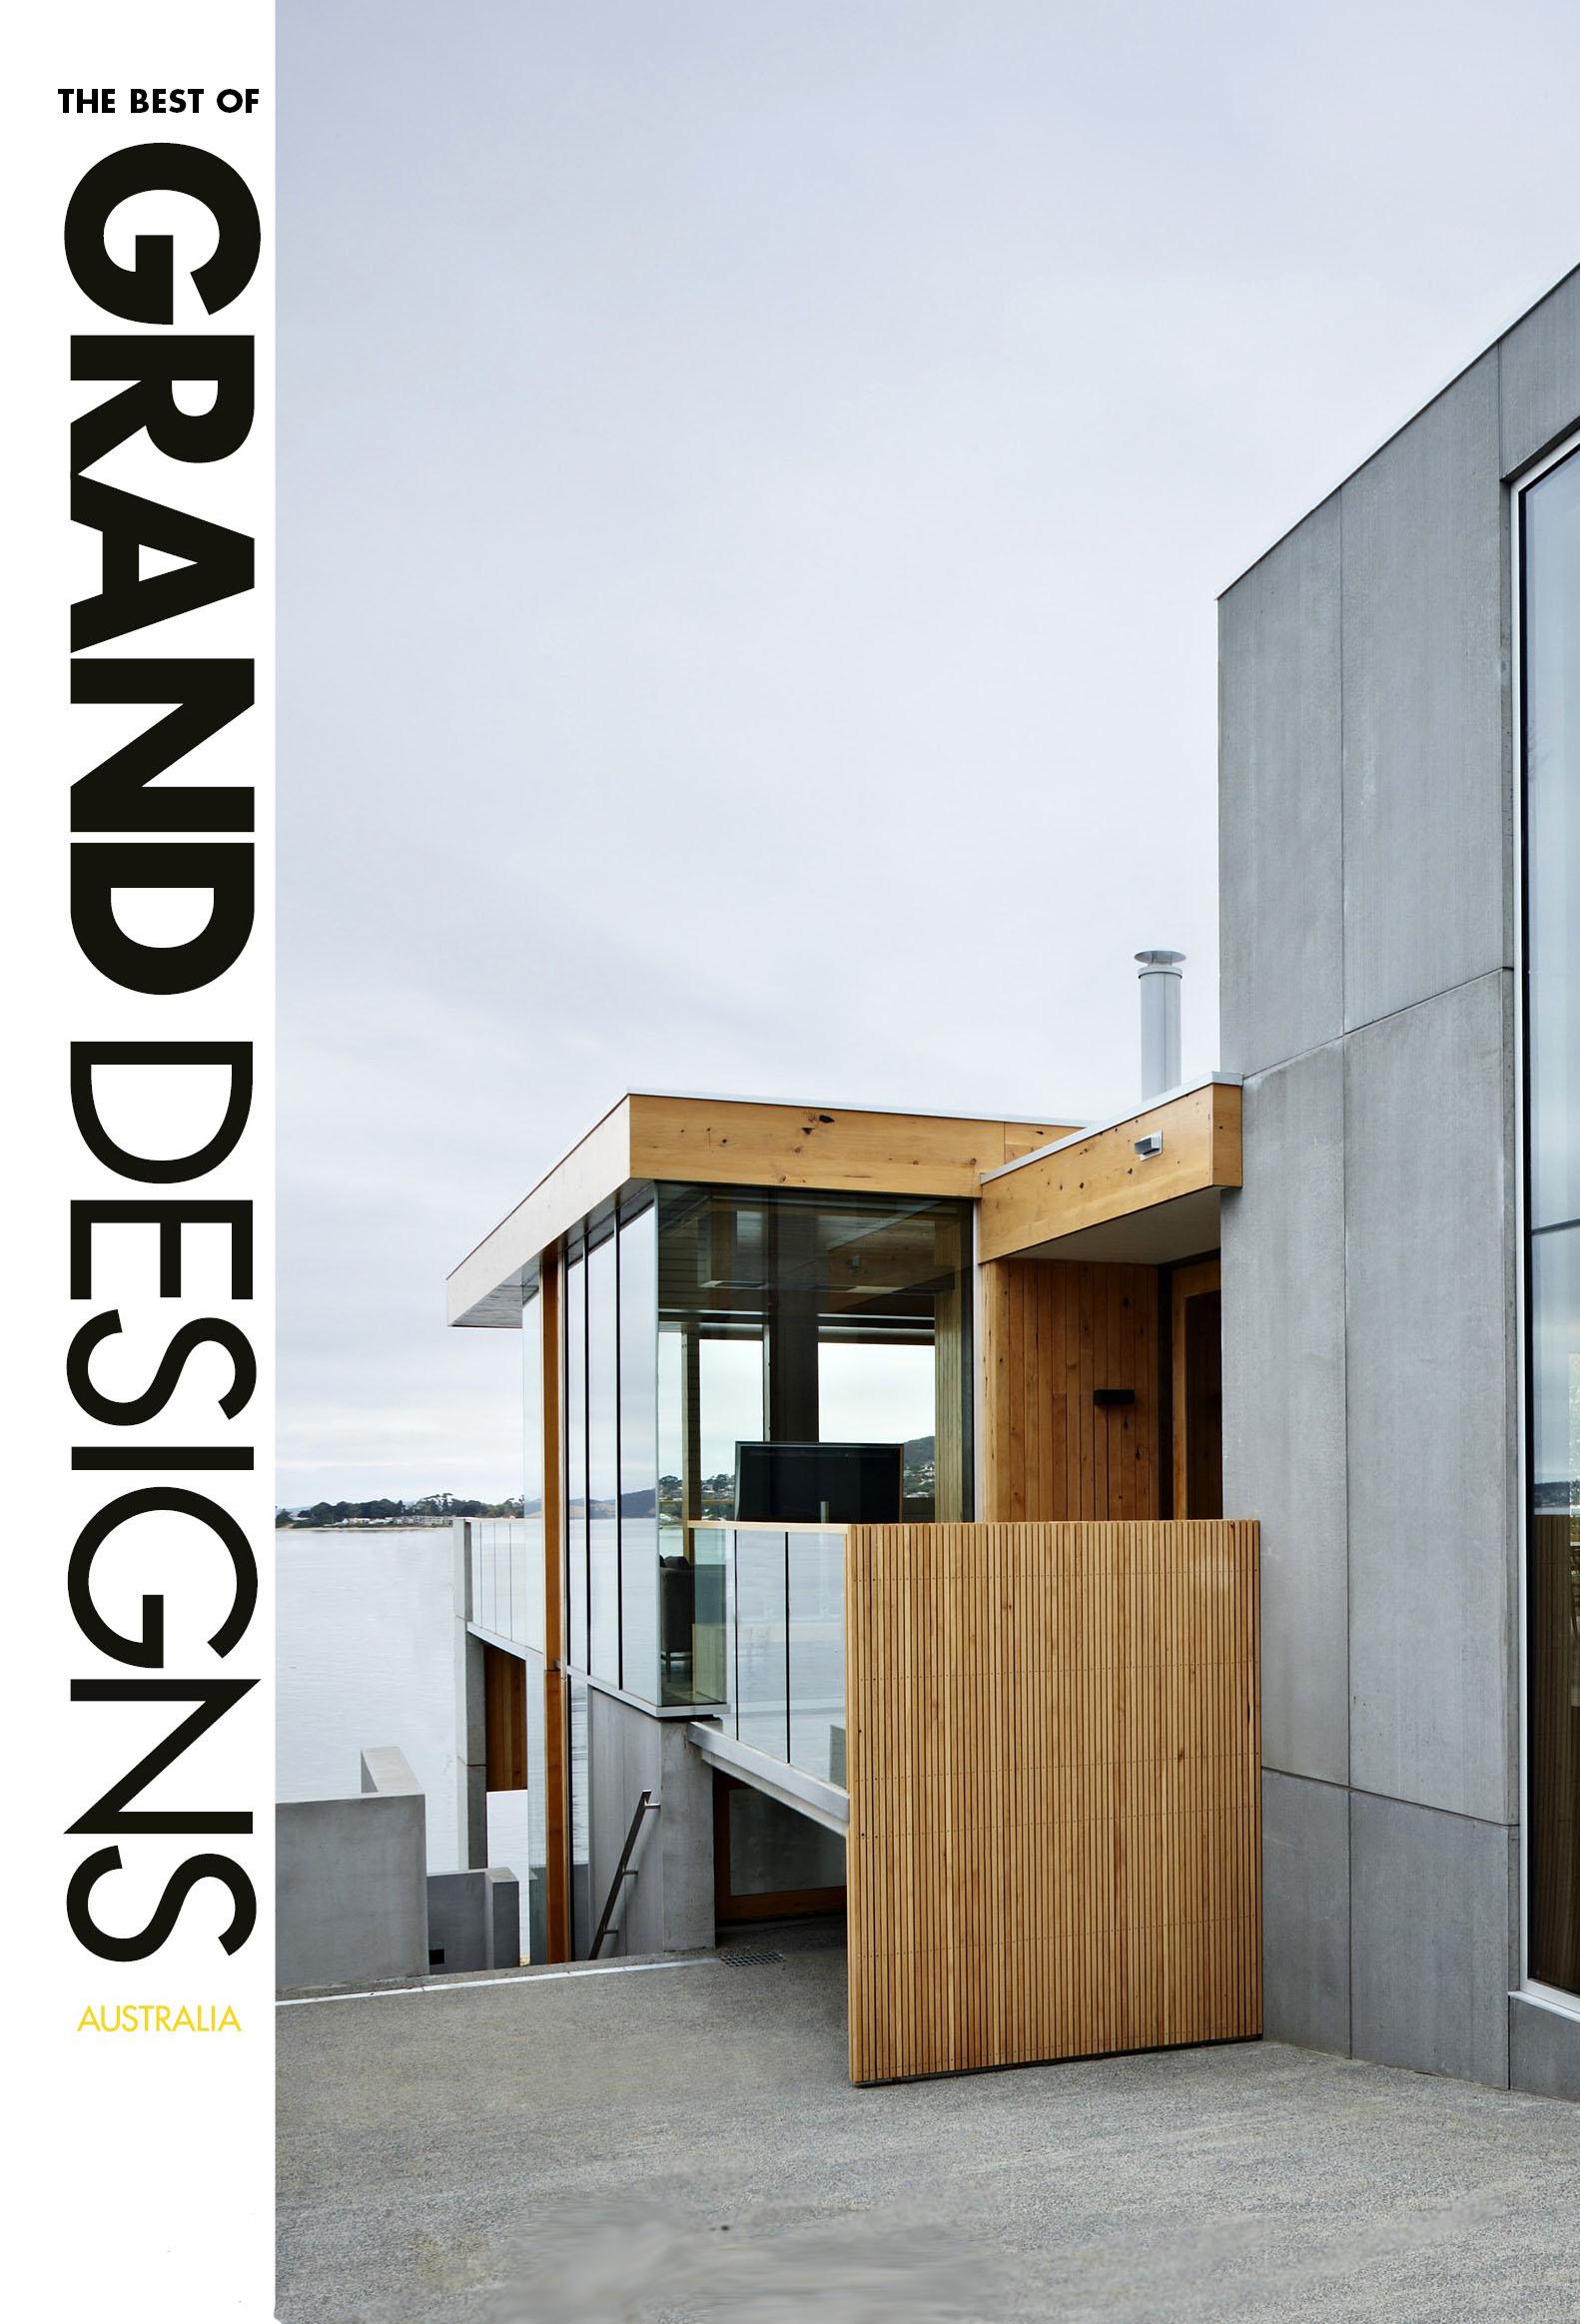 TV ratings for Grand Designs Australia in Suecia. LifeStyle TV series